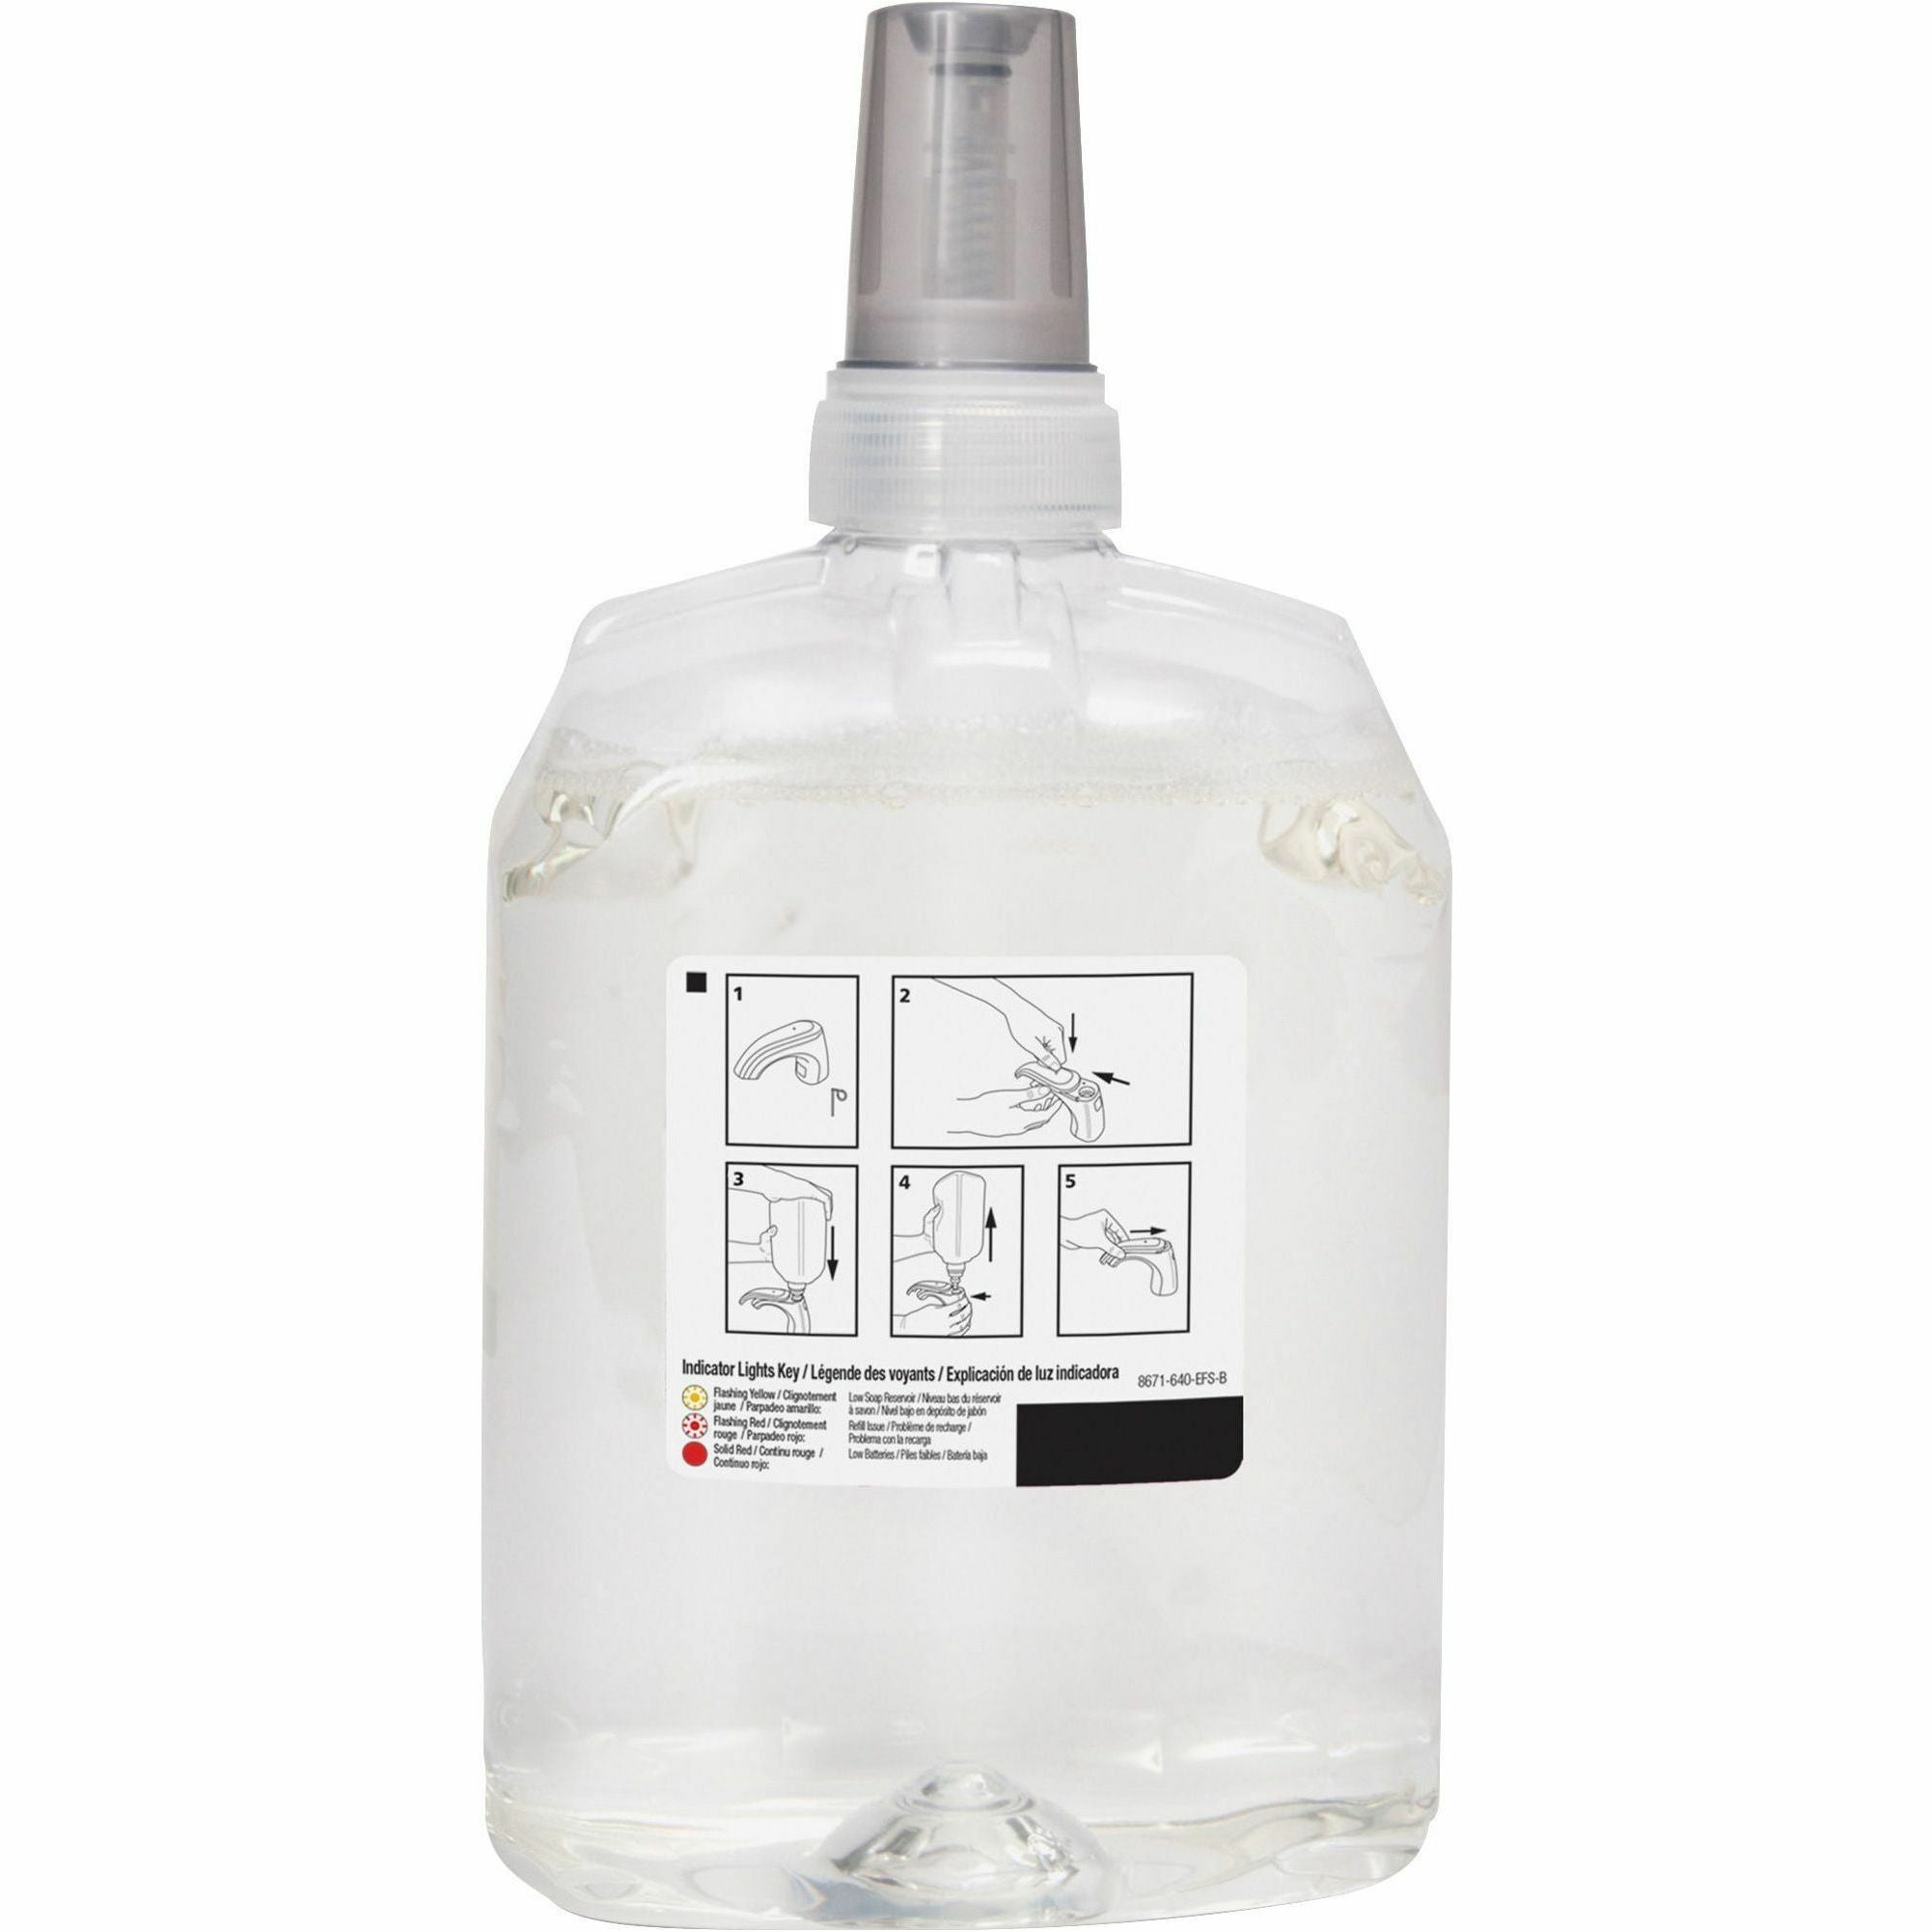 purell-cxr-refill-fragrance-free-foam-soap-676-fl-oz-2-l-bacteria-remover-hand-antibacterial-non-clog-preservative-free-paraben-free-fragrance-free-dye-free-phthalate-free-1-each_goj867204 - 2